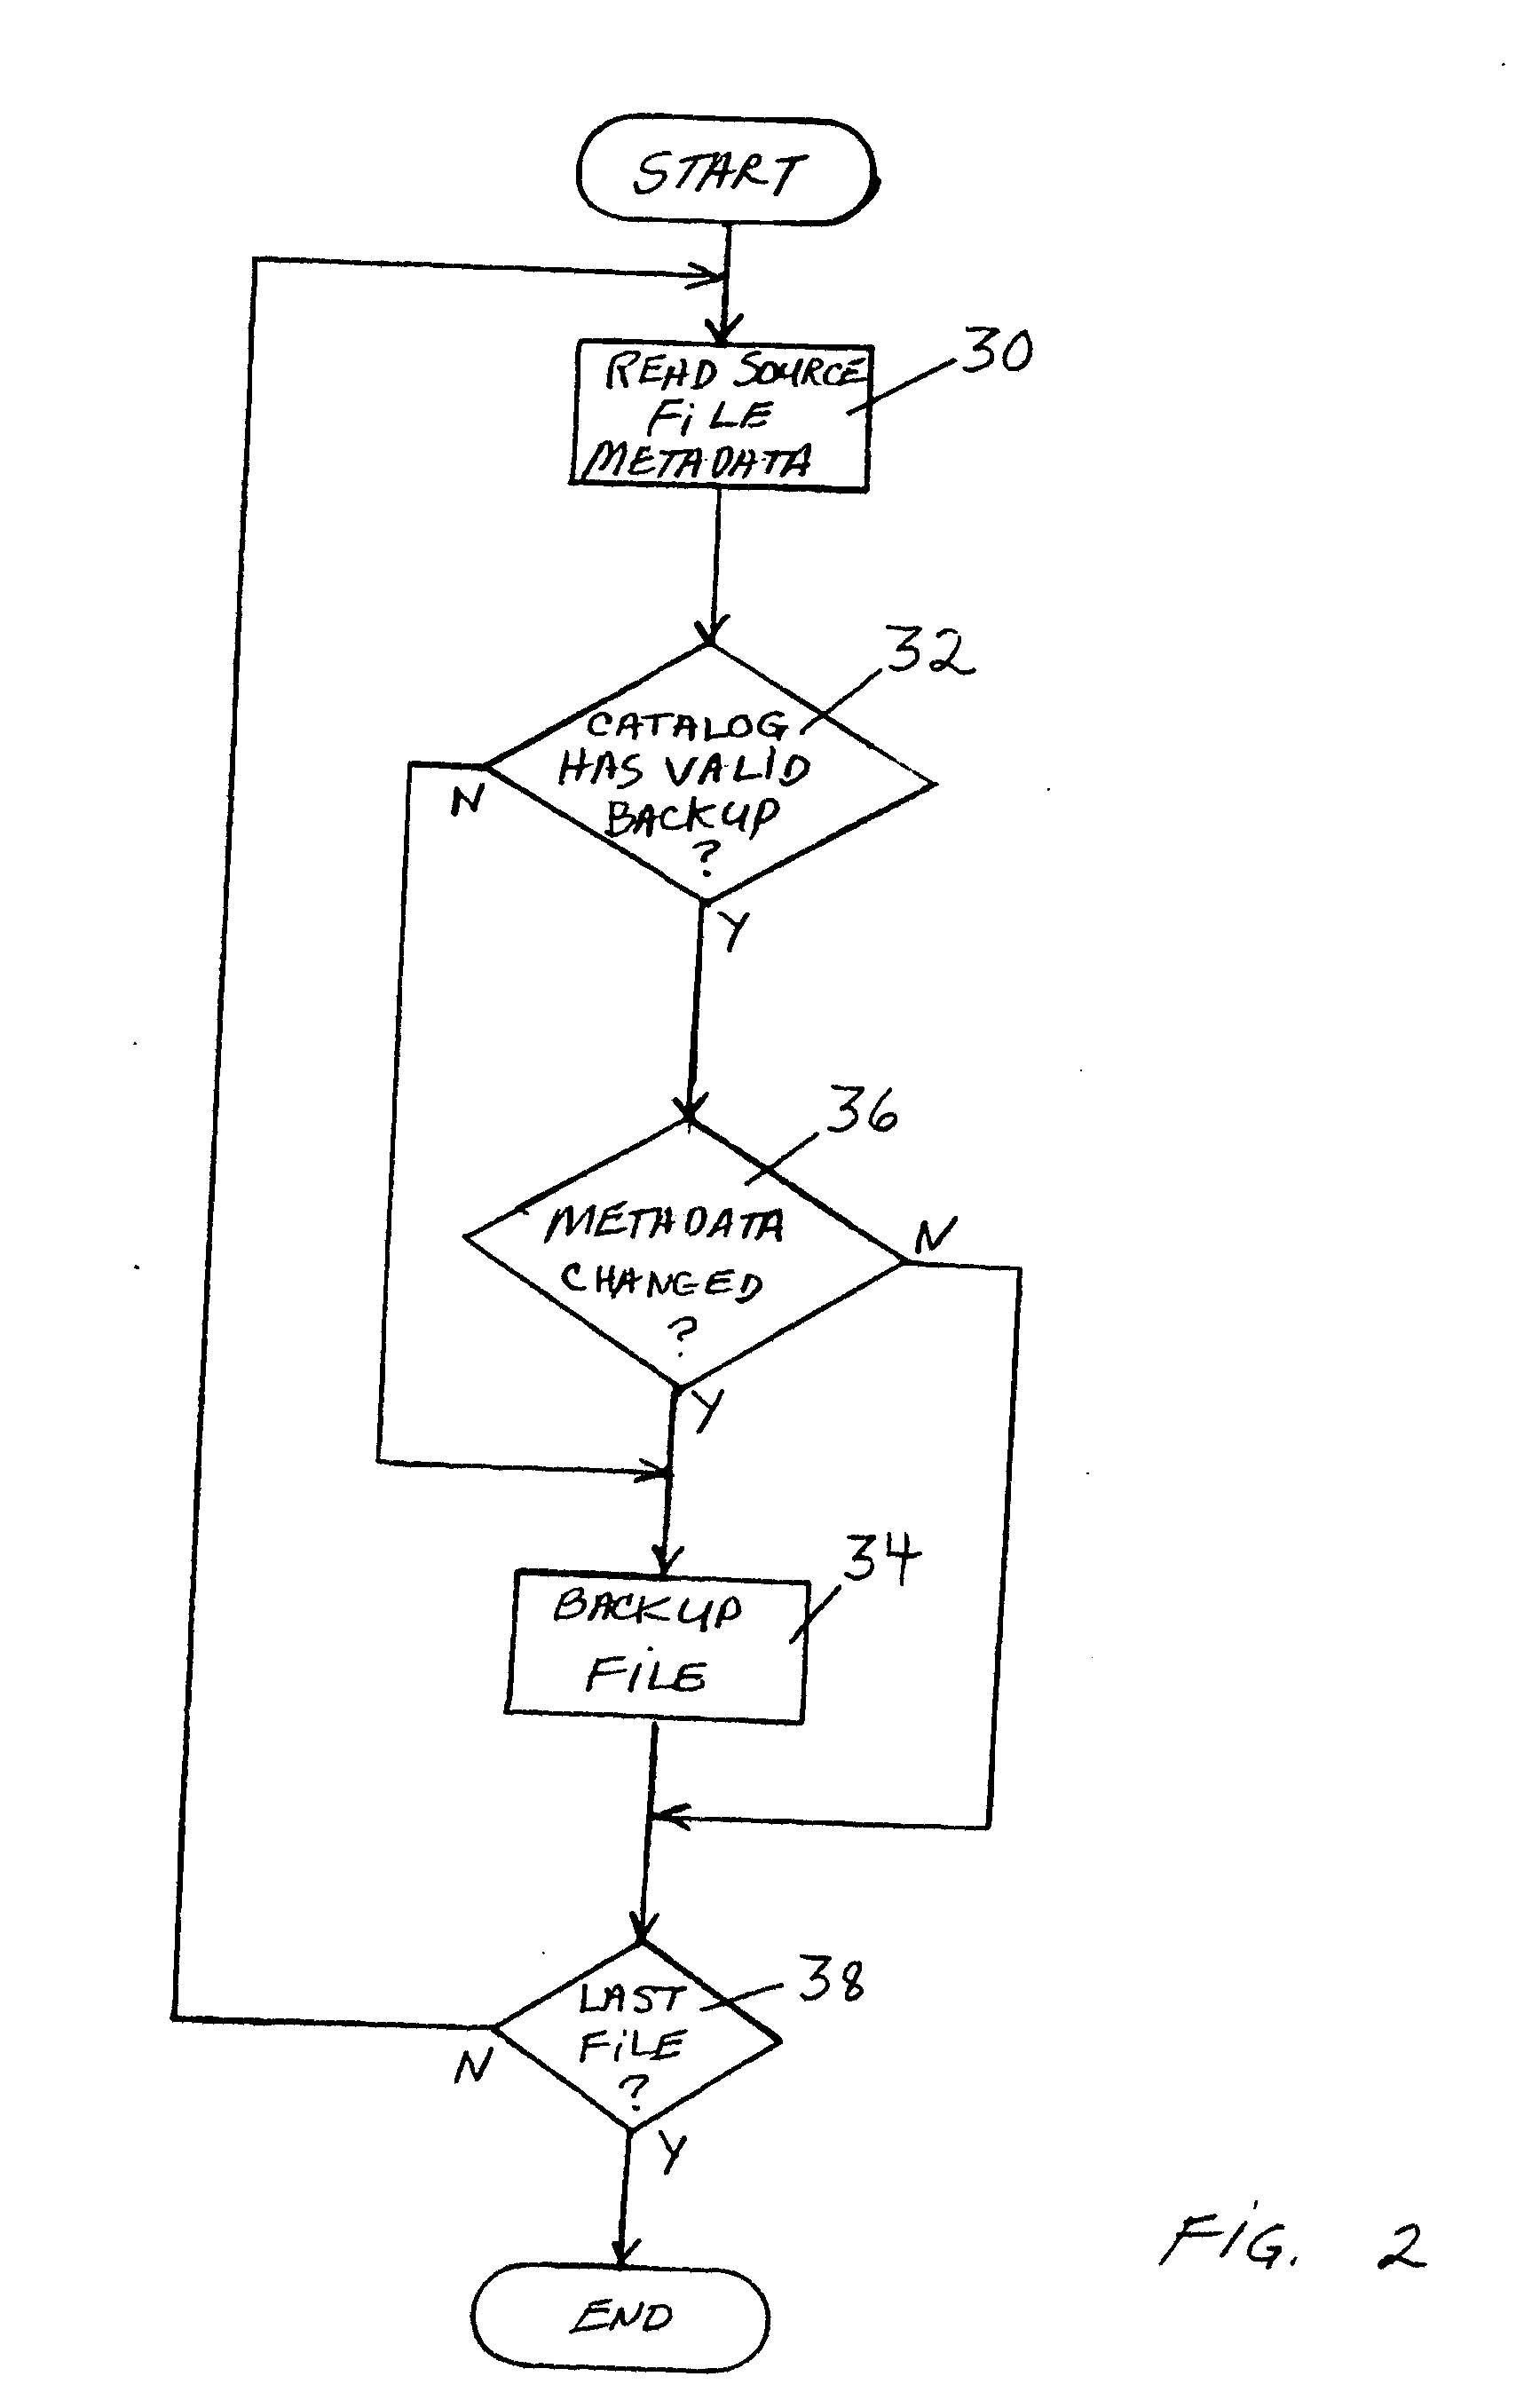 Verification of computer backup data